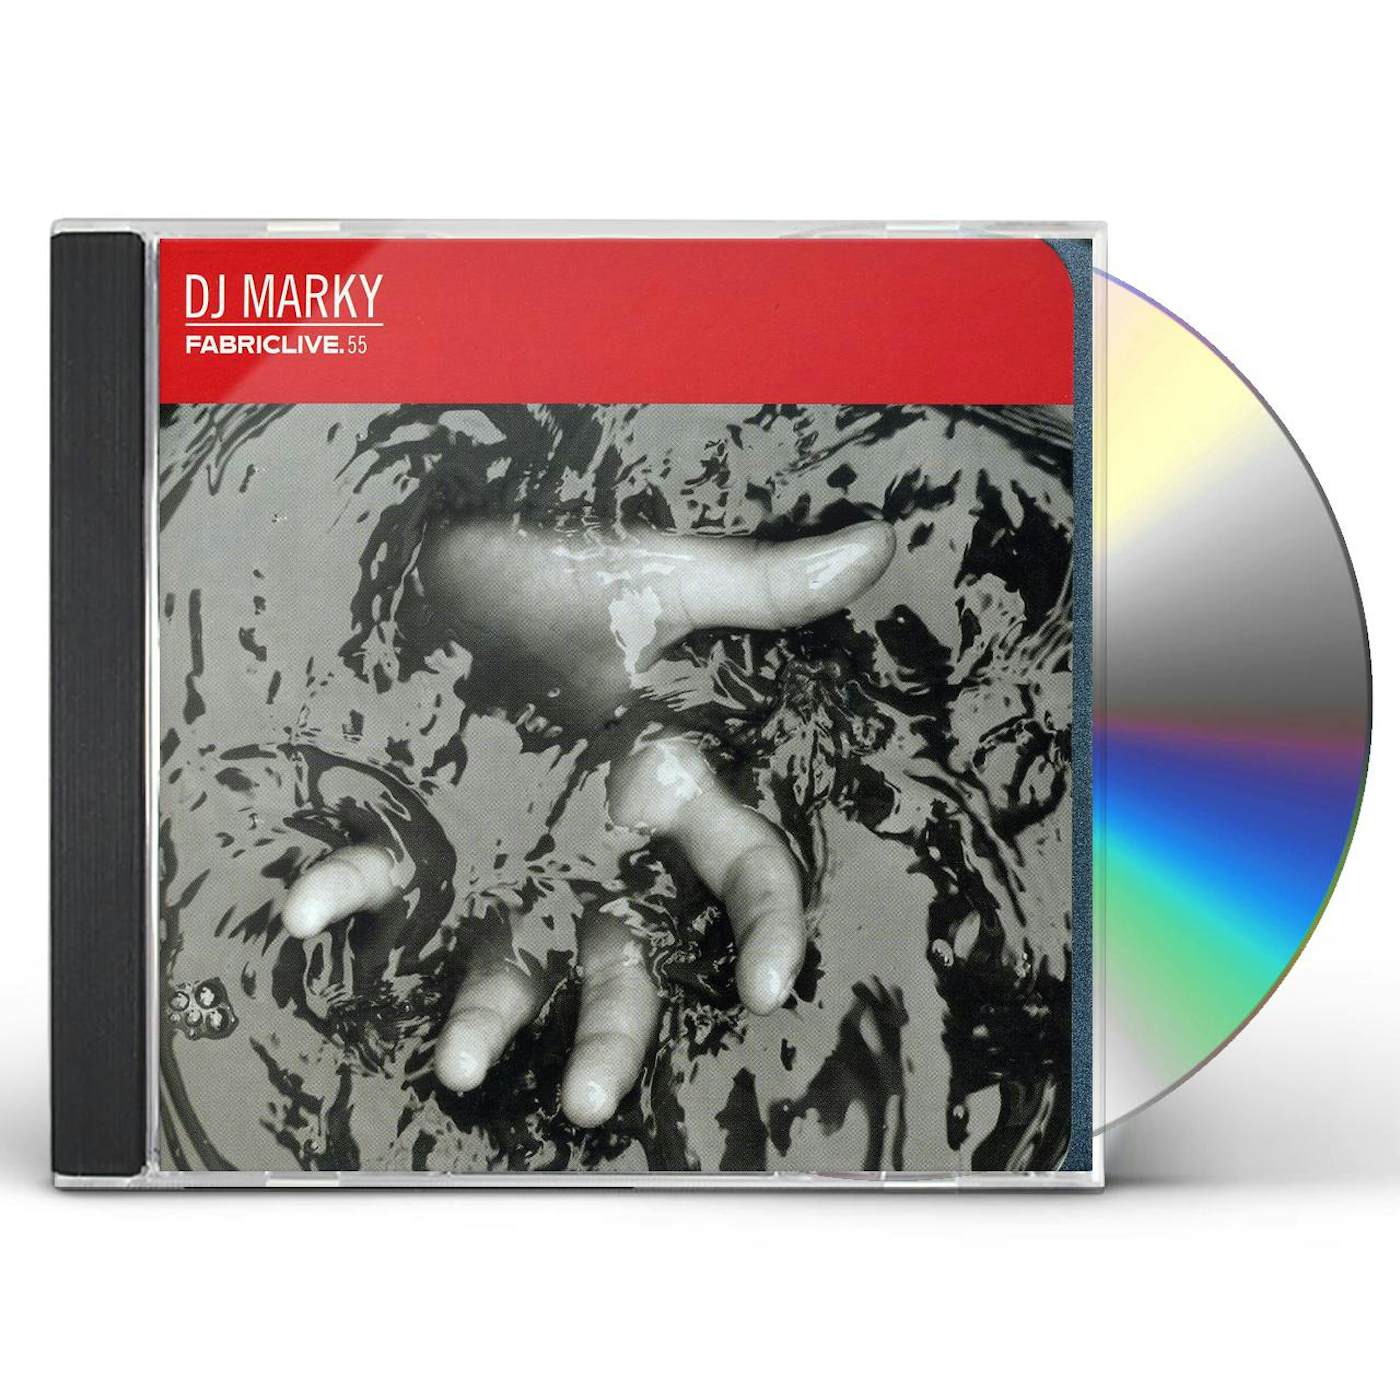 DJ Marky FABRI CLIVE 55 CD